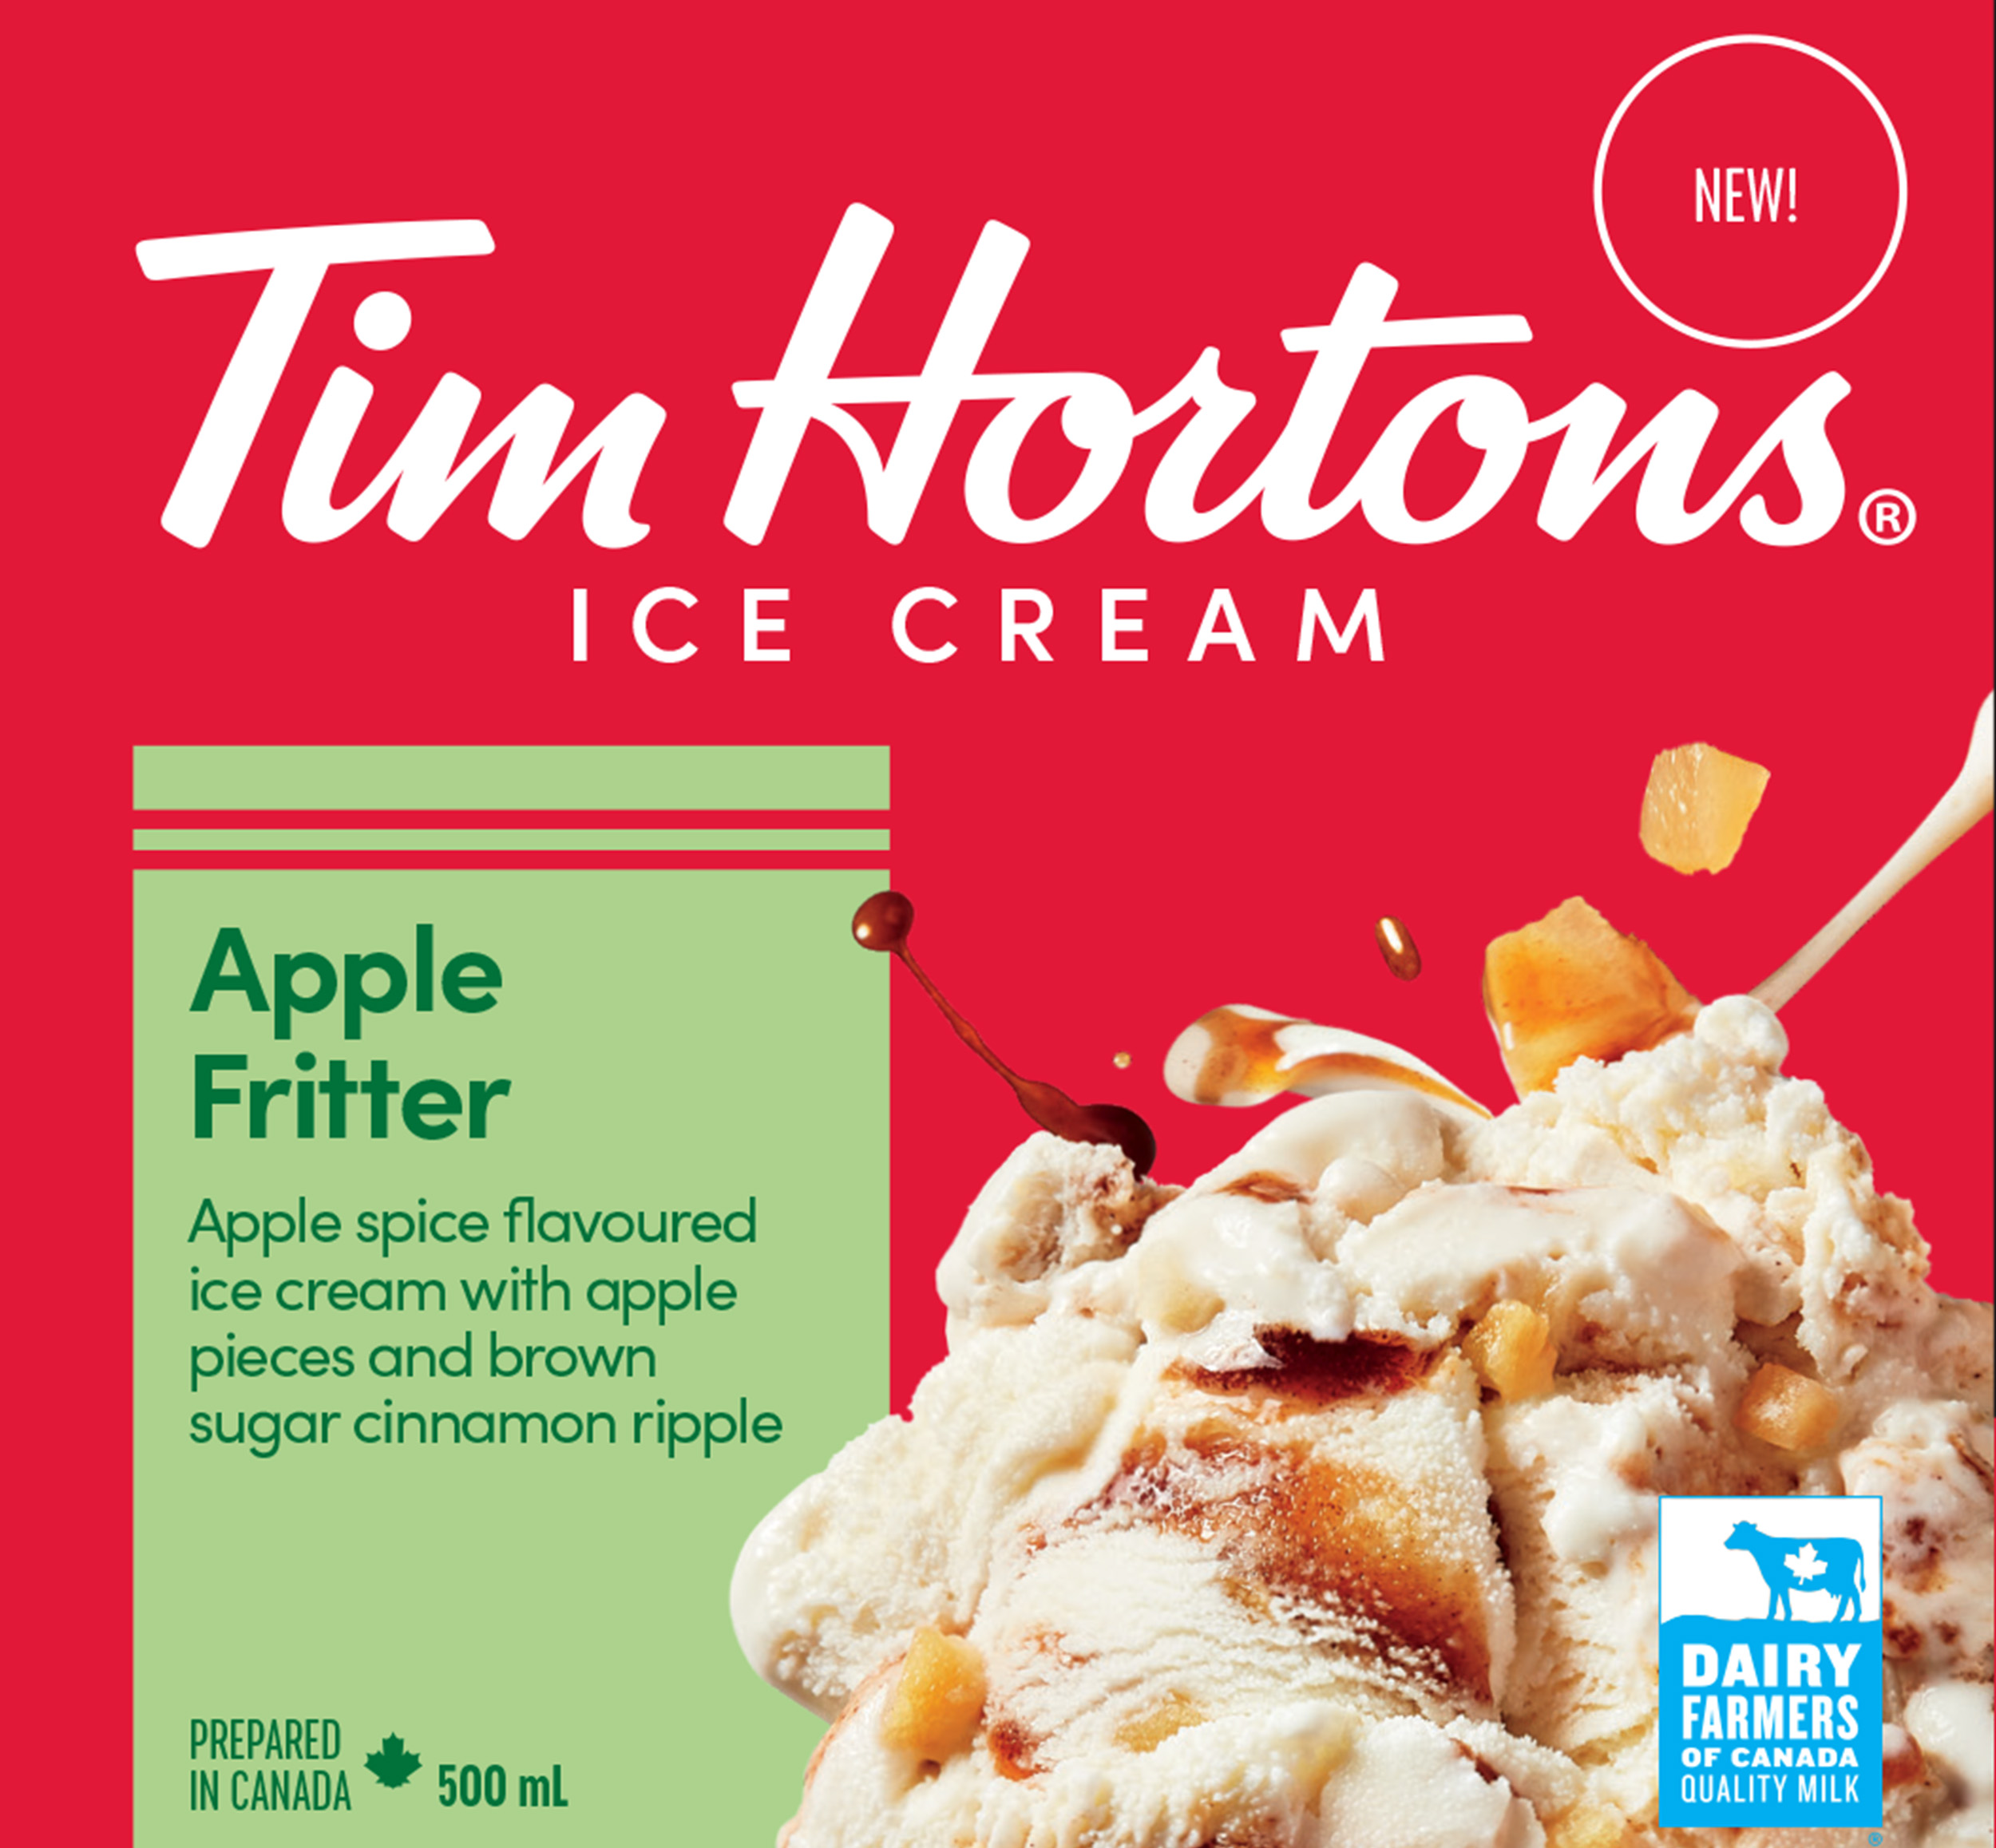 00529-3 Apple Fritter Retail Ice Cream_Tub_CR_R